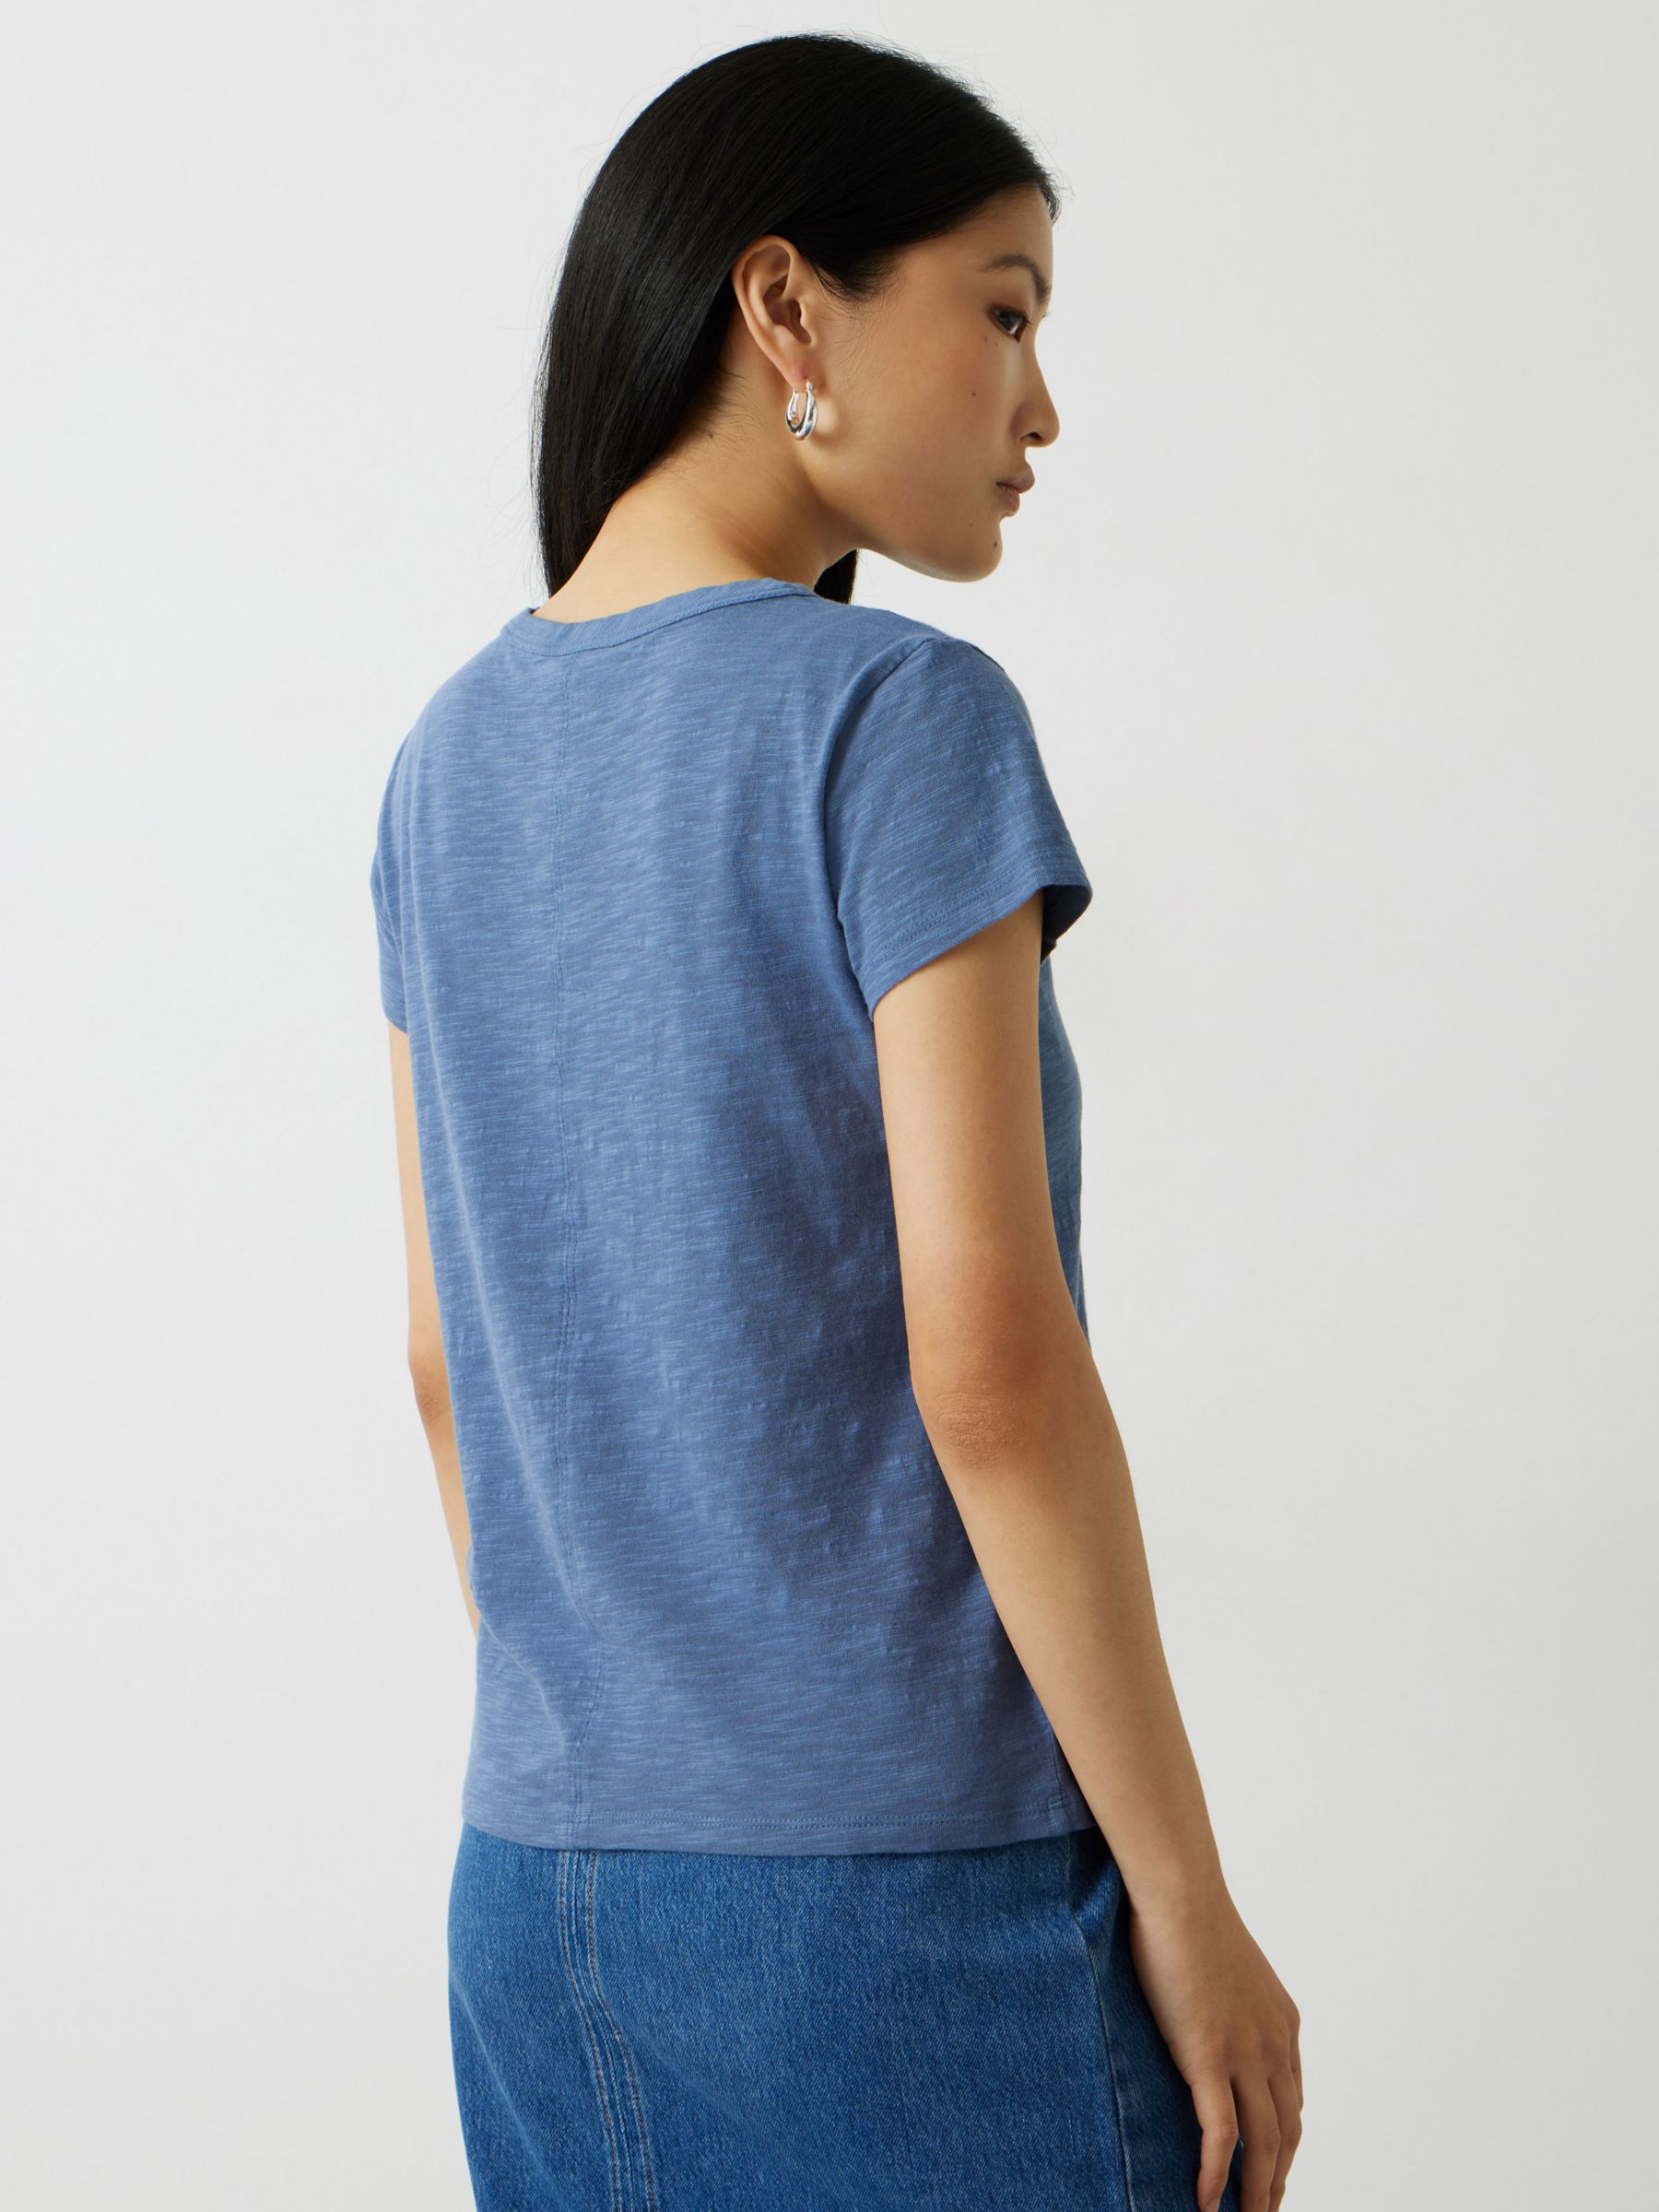 HUSH Slim Fit Cotton Crew Neck T-Shirt, Denim Blue at John Lewis & Partners